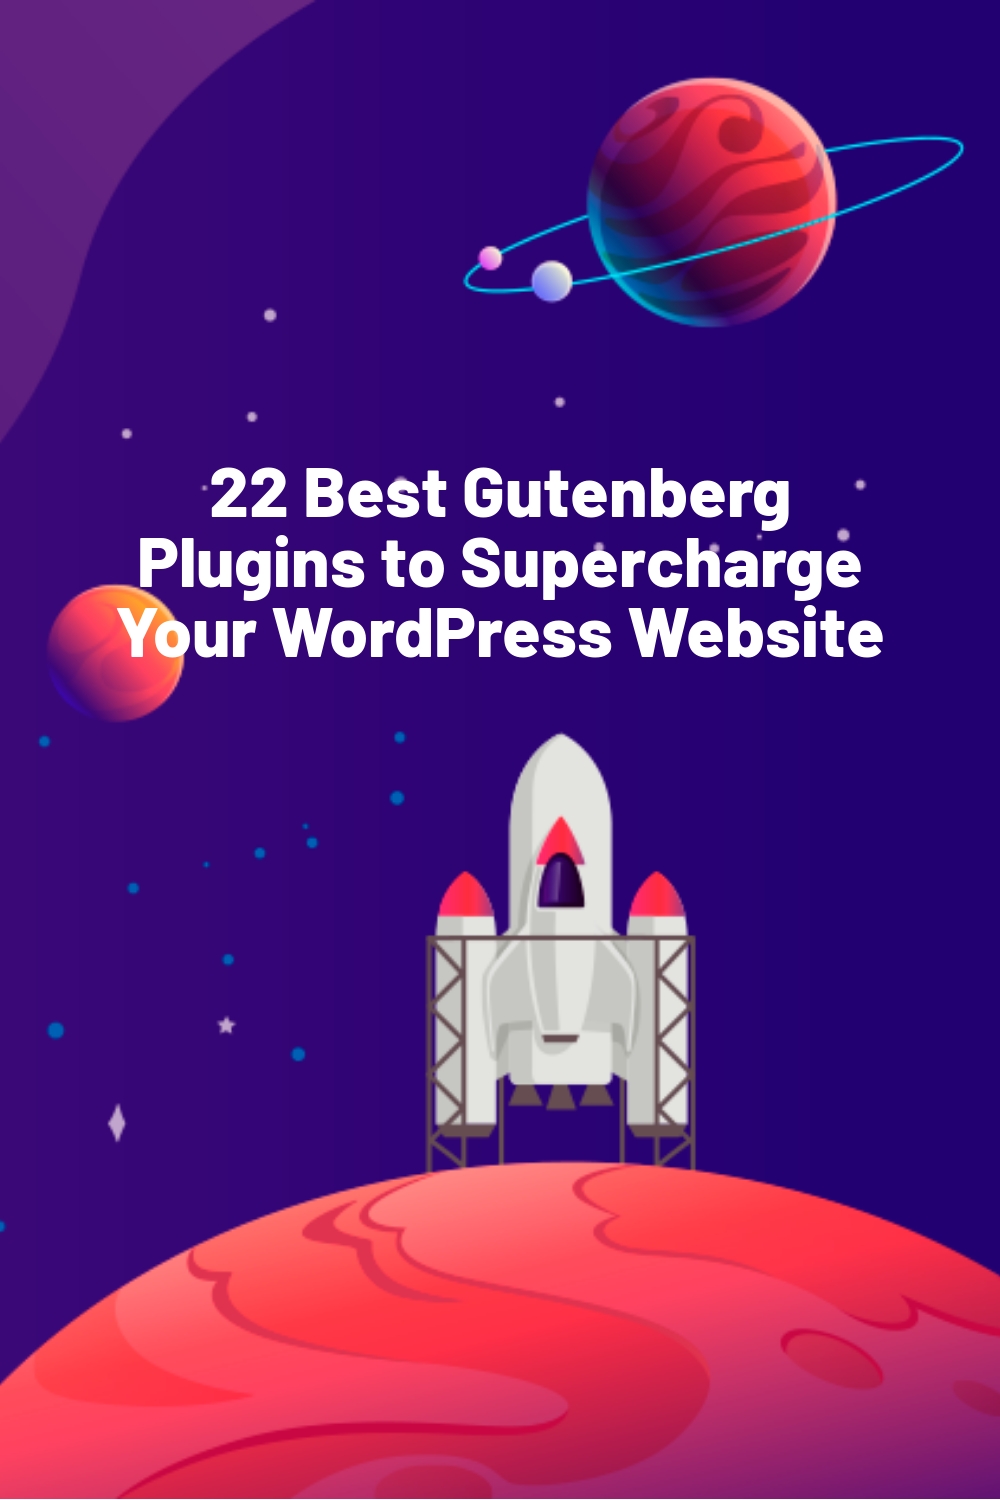 22 Best Gutenberg Plugins to Supercharge Your WordPress Website